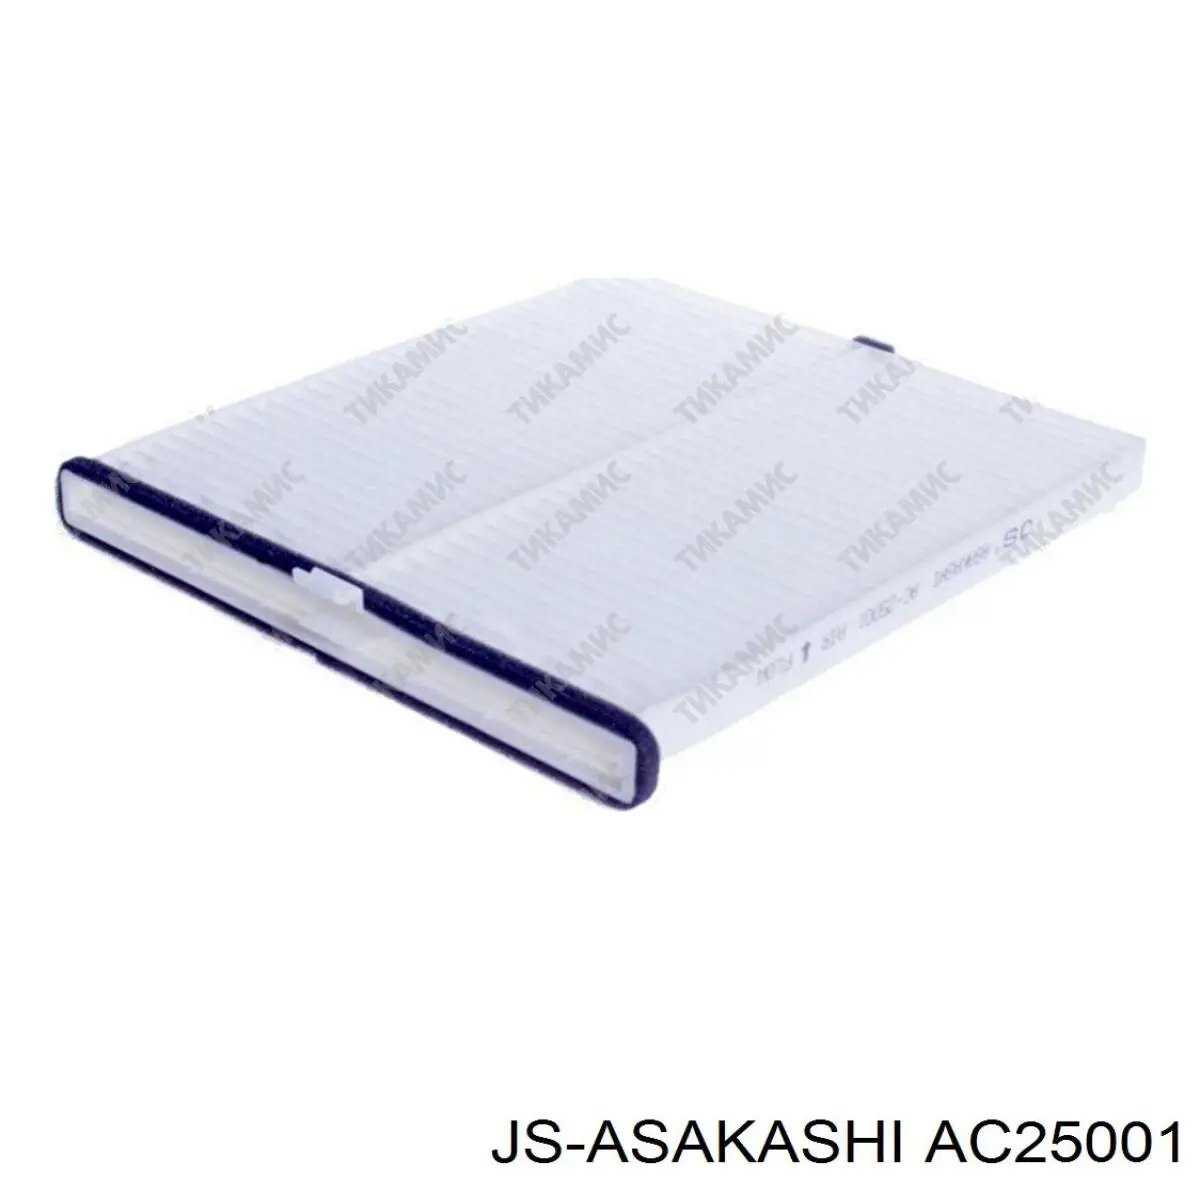 AC25001 JS Asakashi filtro habitáculo